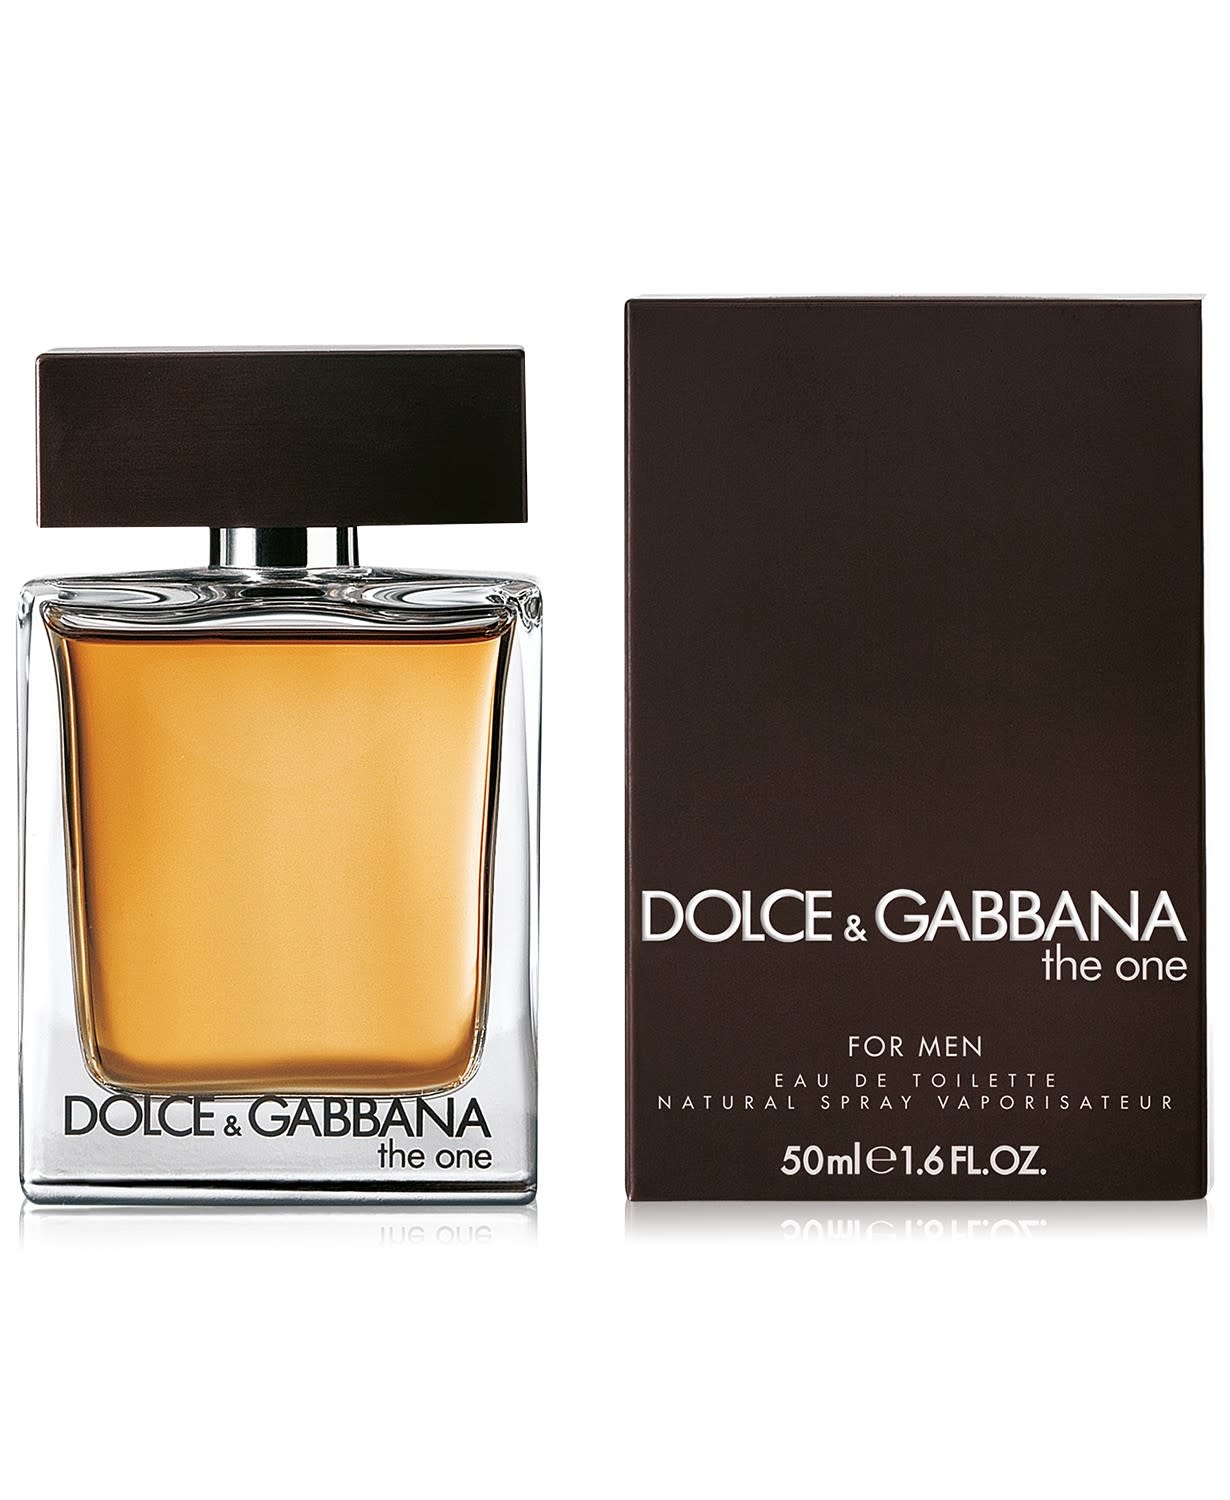 Дольче габбана мужские авито. Dolce&Gabbana the one for men Toilette 100 ml. Dolce Gabbana the one for men 100 мл. Дольче Габбана the one 100ml. Dolce Gabbana the one for men 100ml EDT.